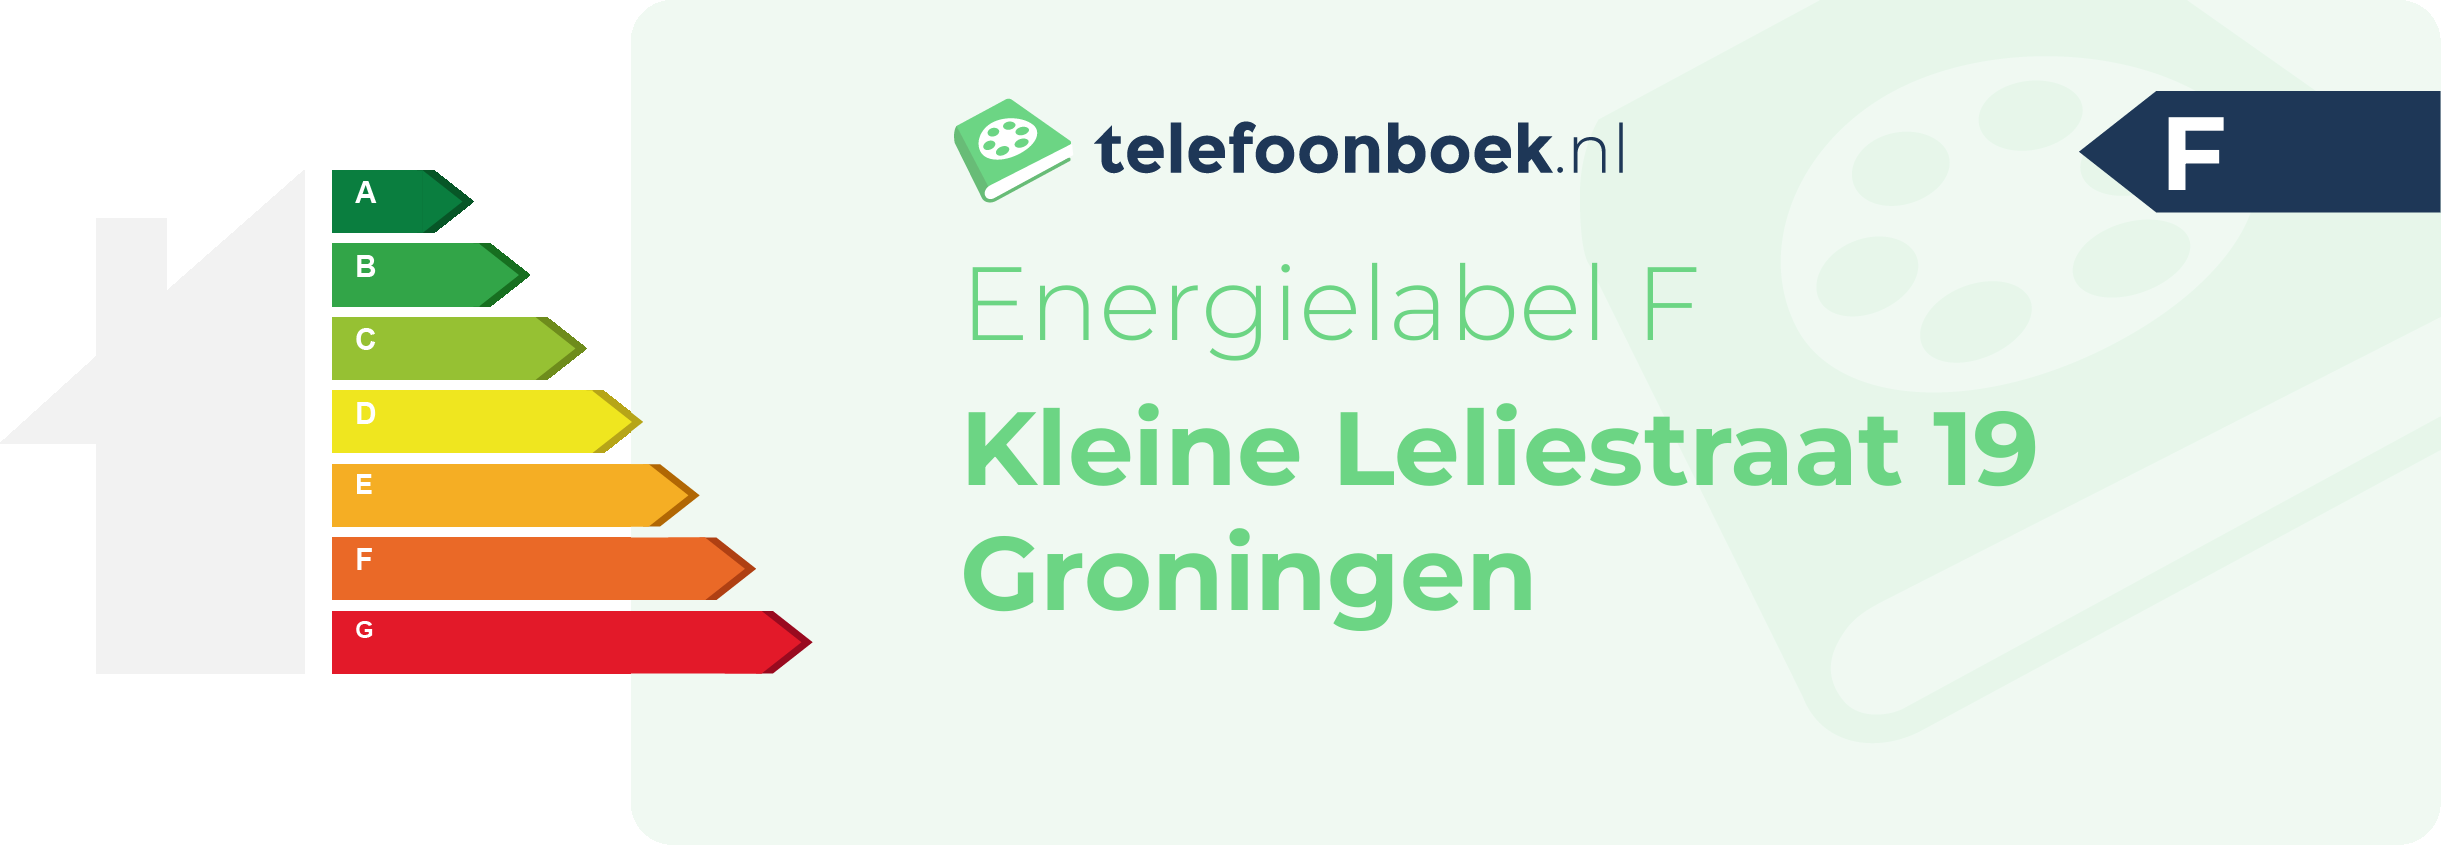 Energielabel Kleine Leliestraat 19 Groningen